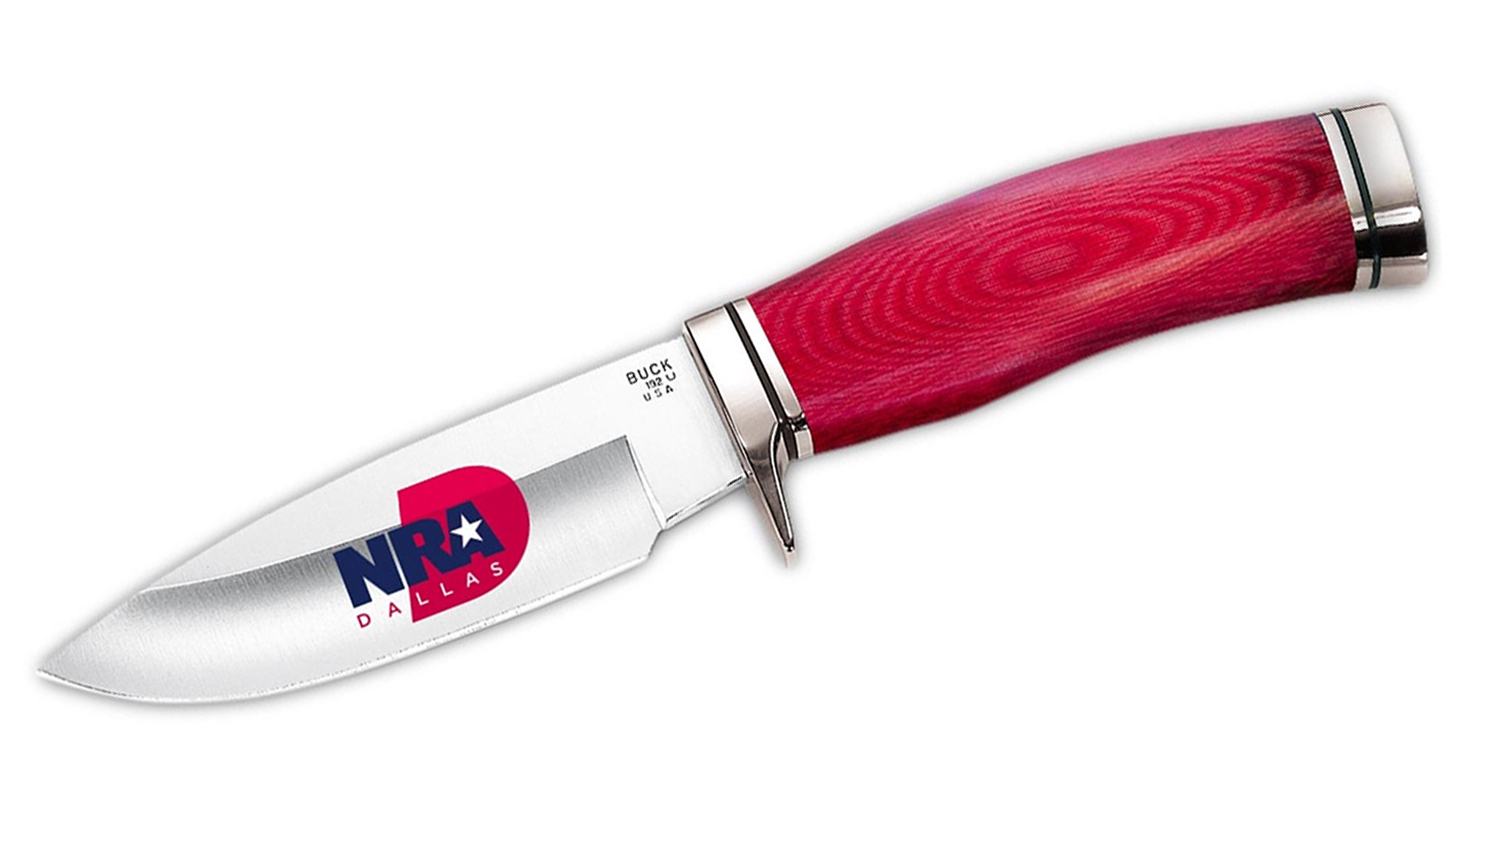 NRAstore Product Highlight: NRA Ltd. Ed. 2018 Annual Meeting Buck Knife